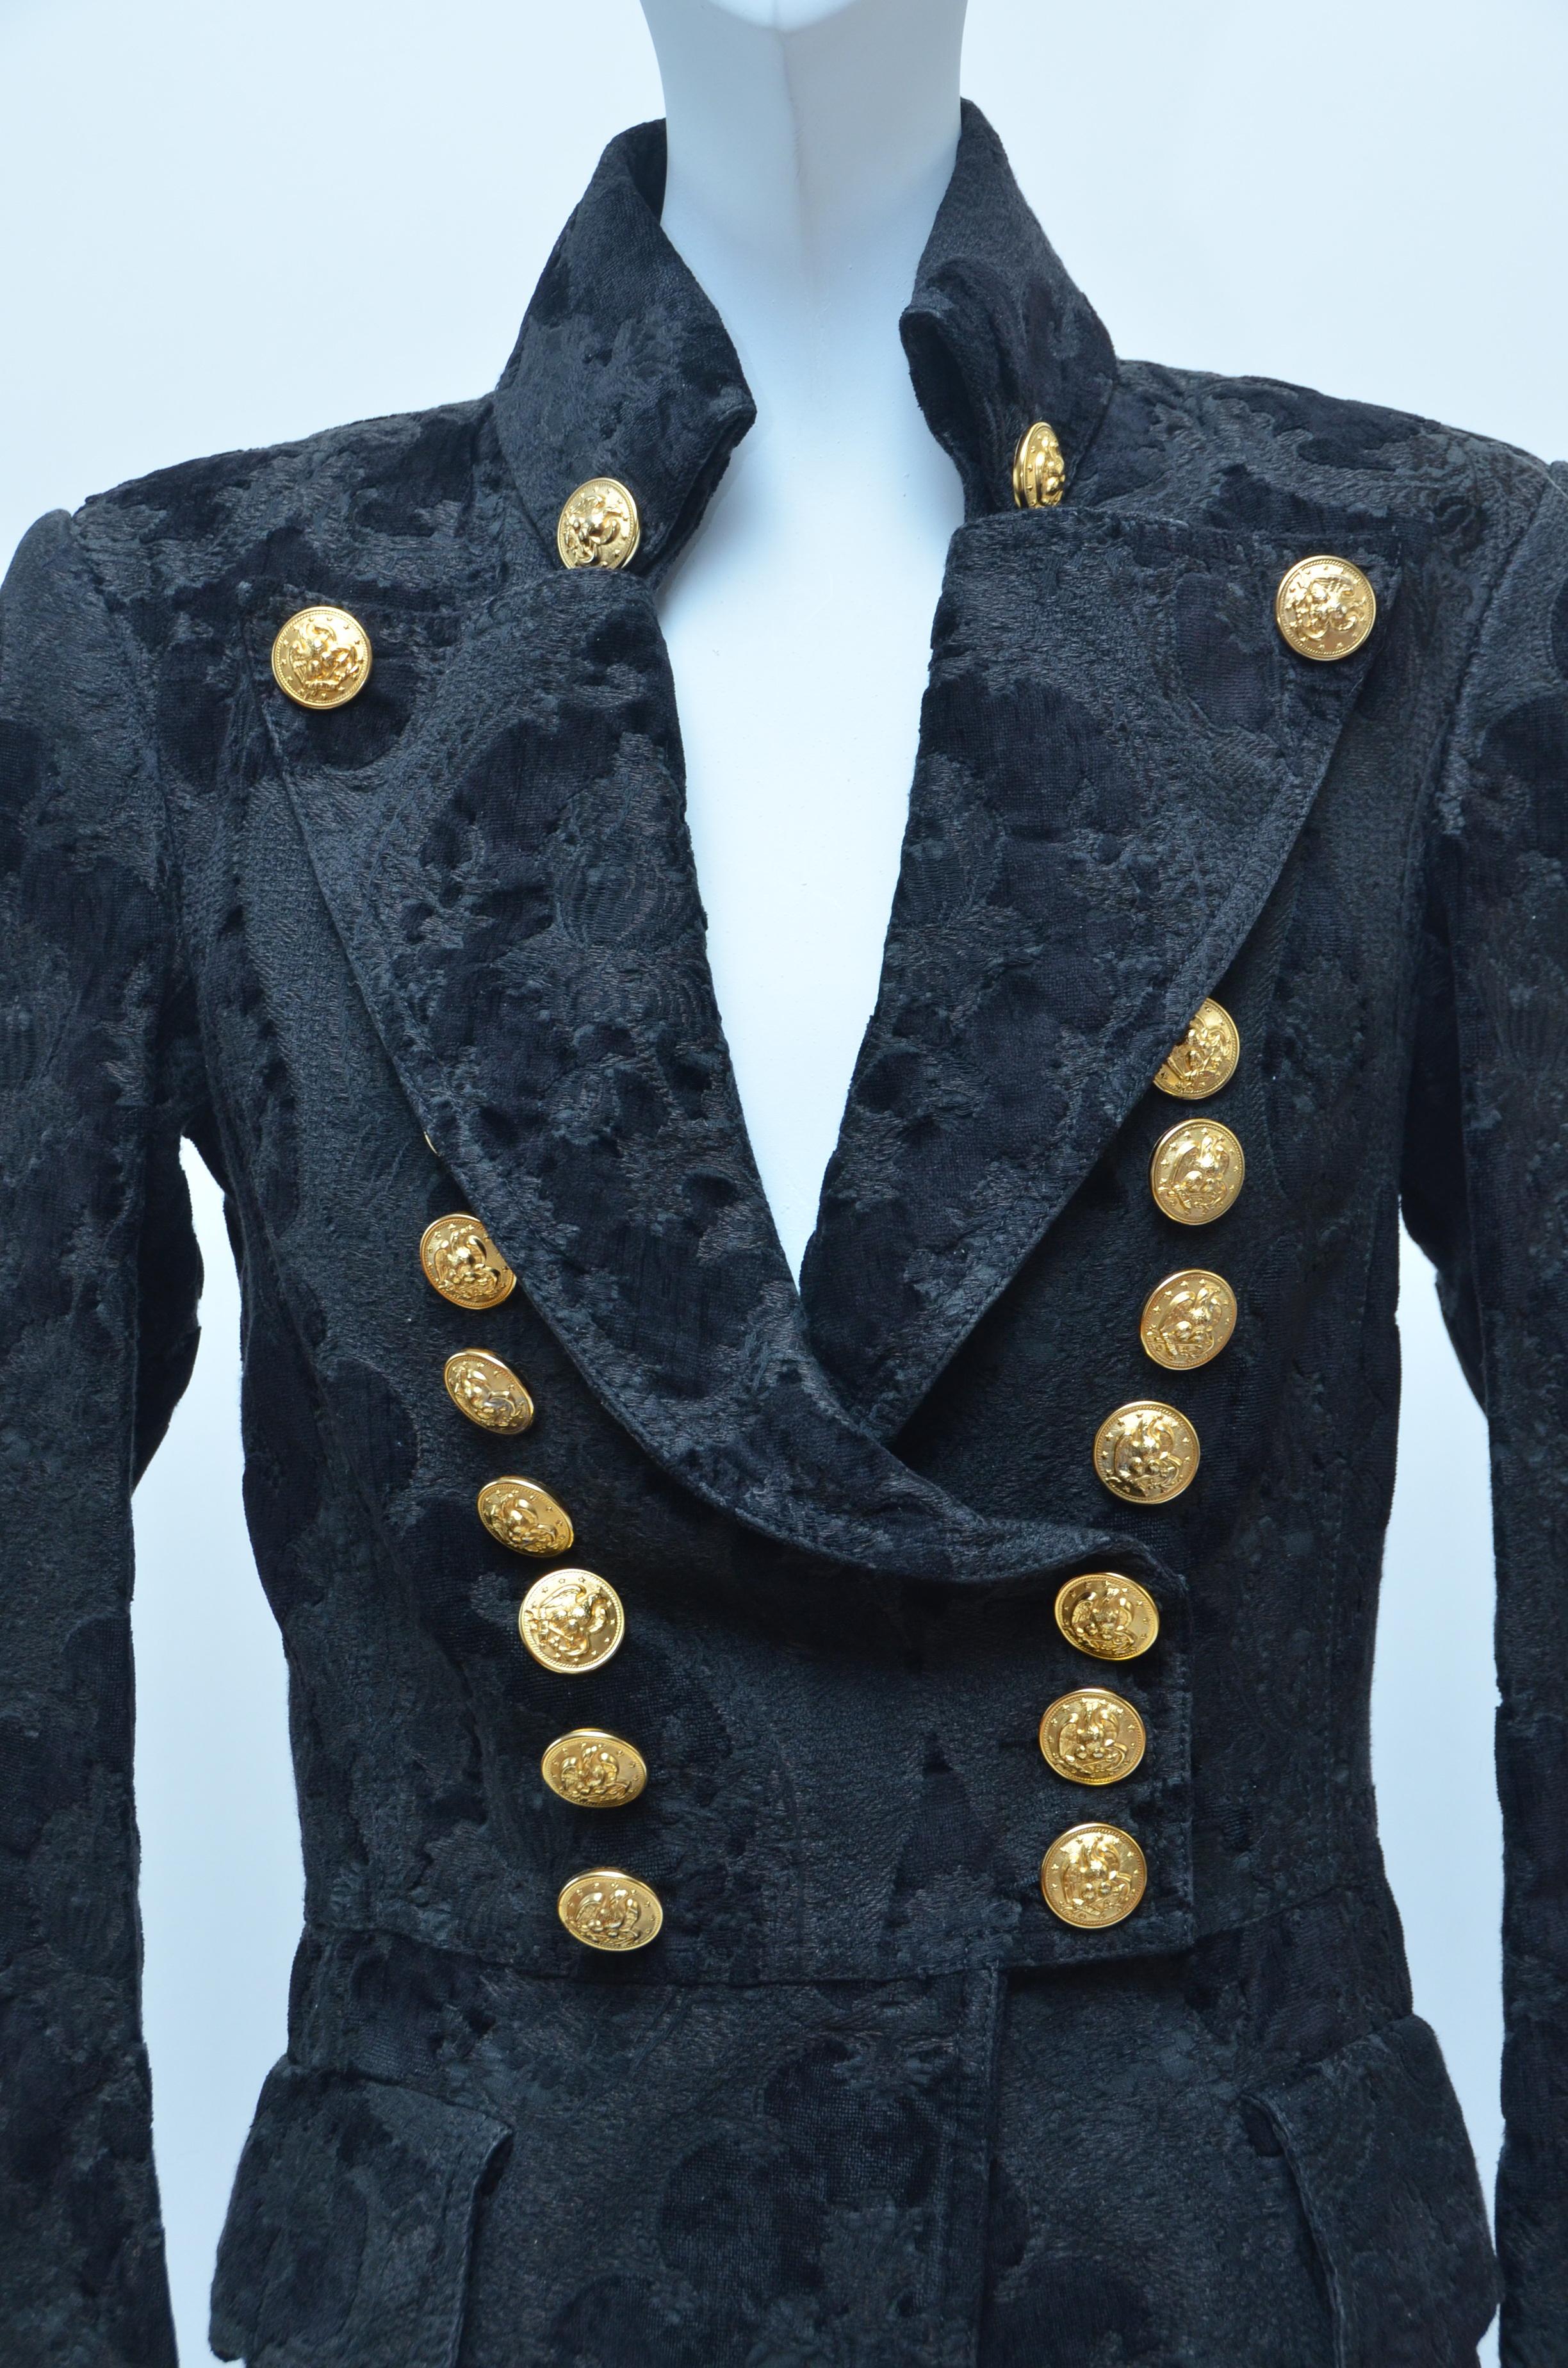 BALMAIN Black Jacquard Brocade Military Coat 36 FR NEW Retailed  $18, 020 1